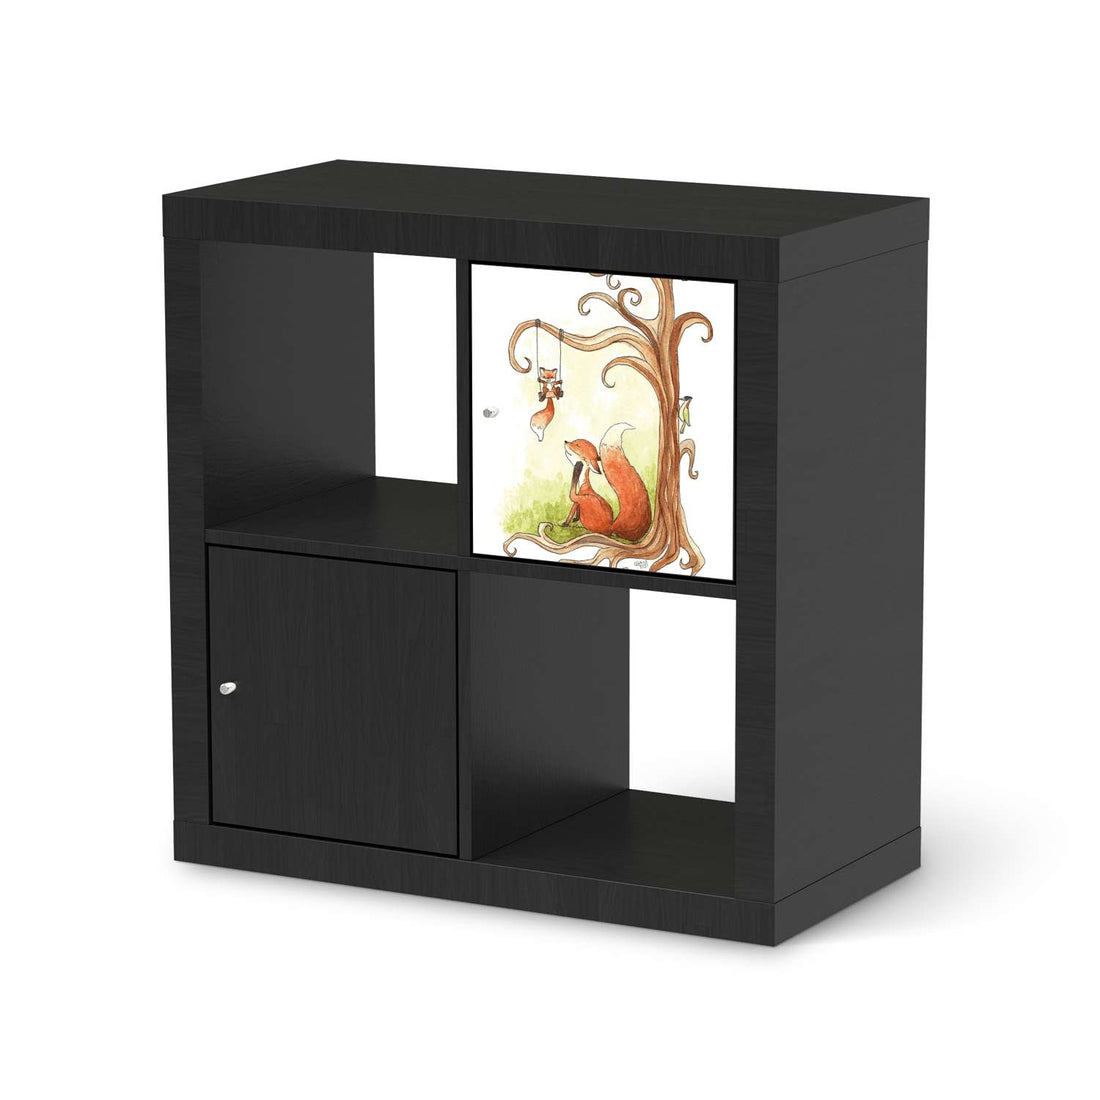 Selbstklebende Folie Füchse - IKEA Kallax Regal 1 Türe - schwarz